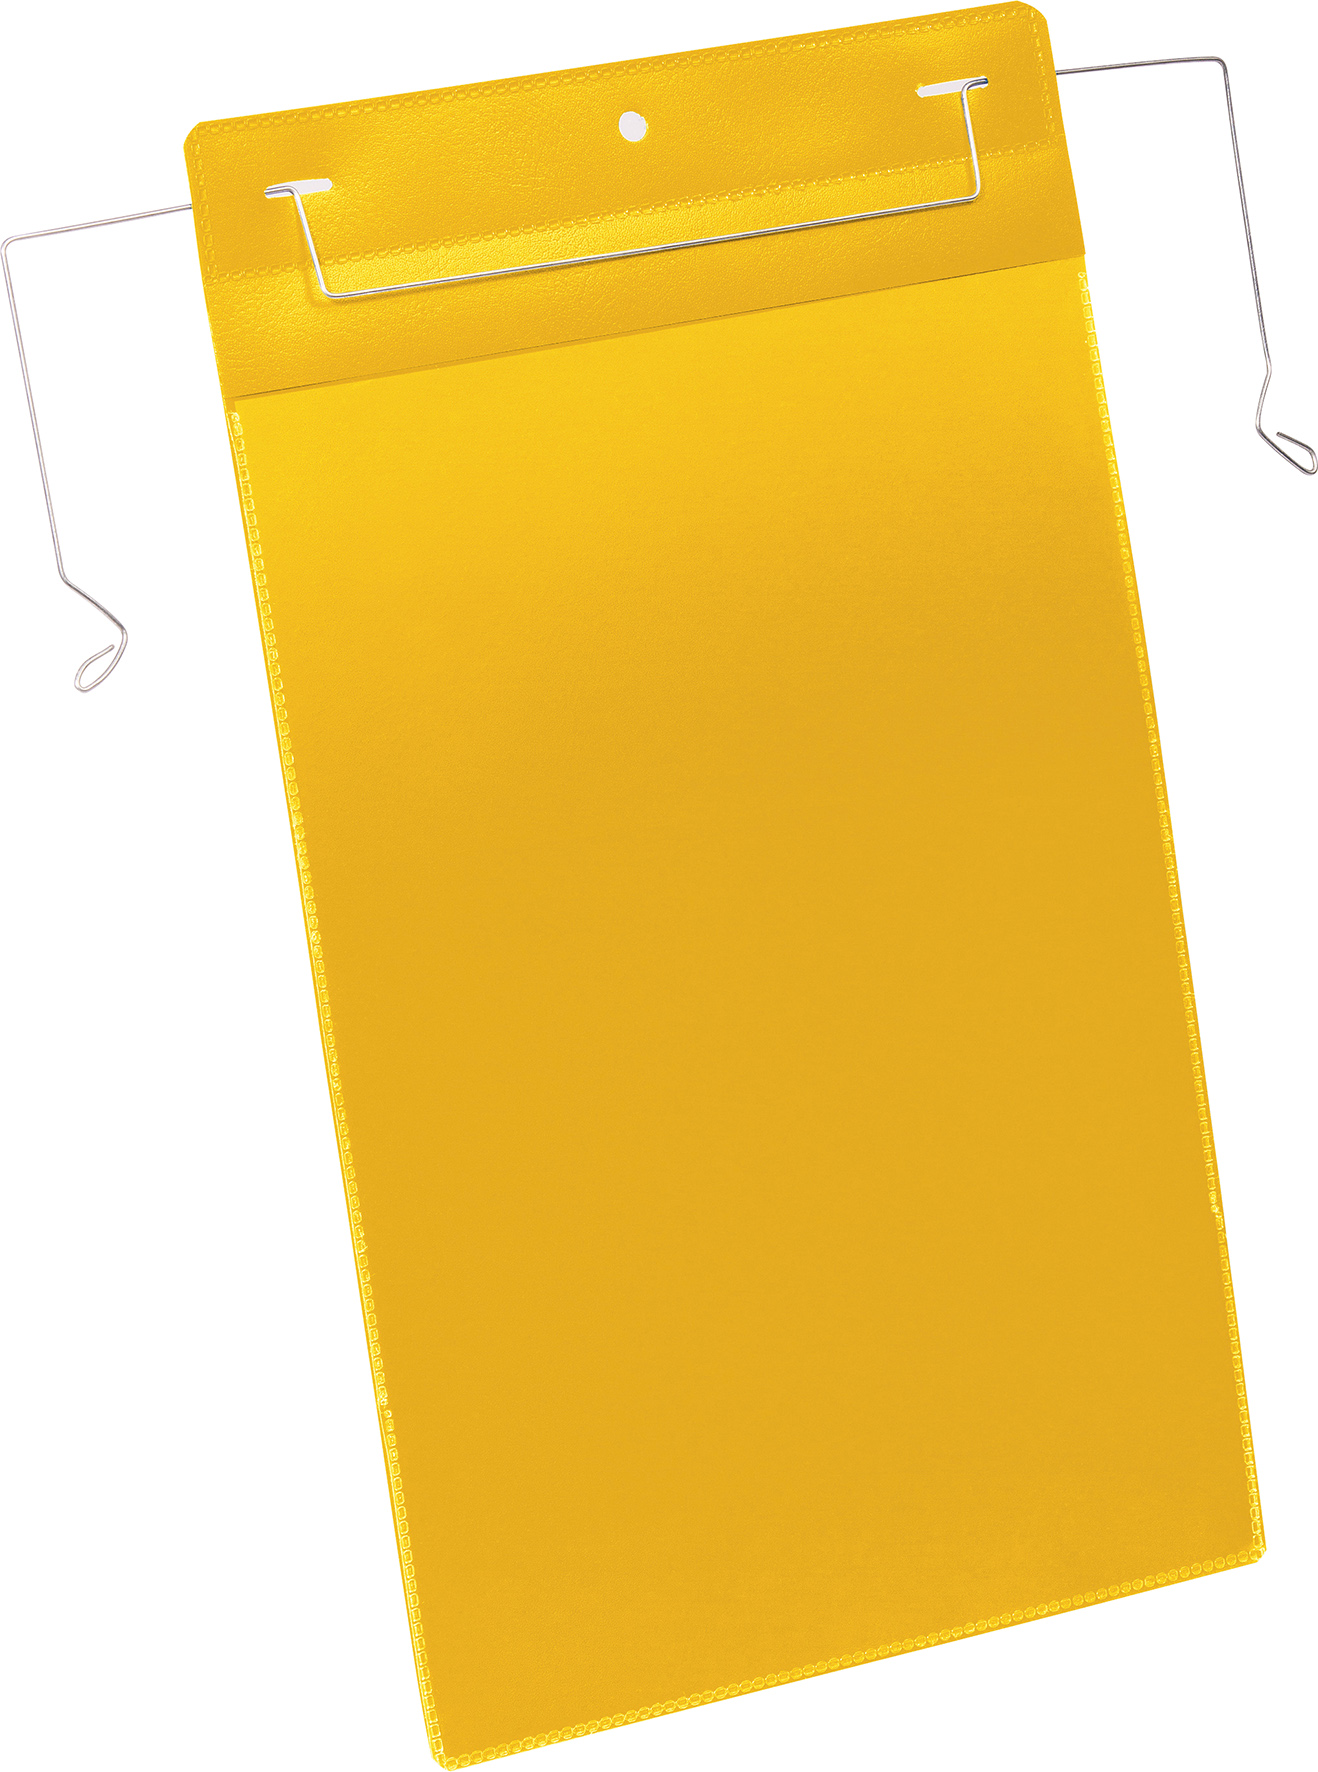 [8552736] Plastficka A4S trådbygel gul